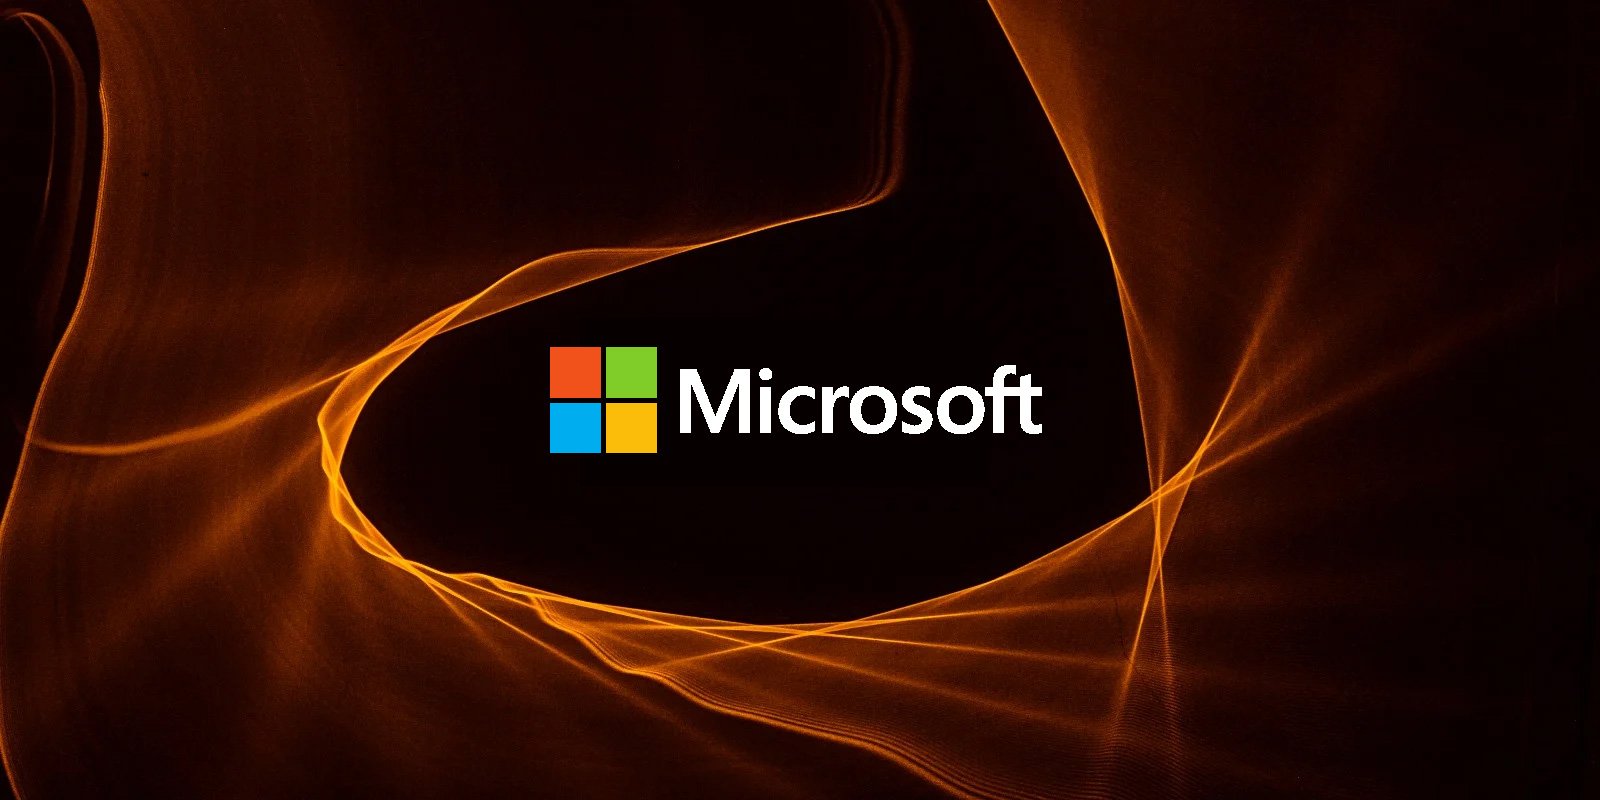 Microsoft logo on a fire background